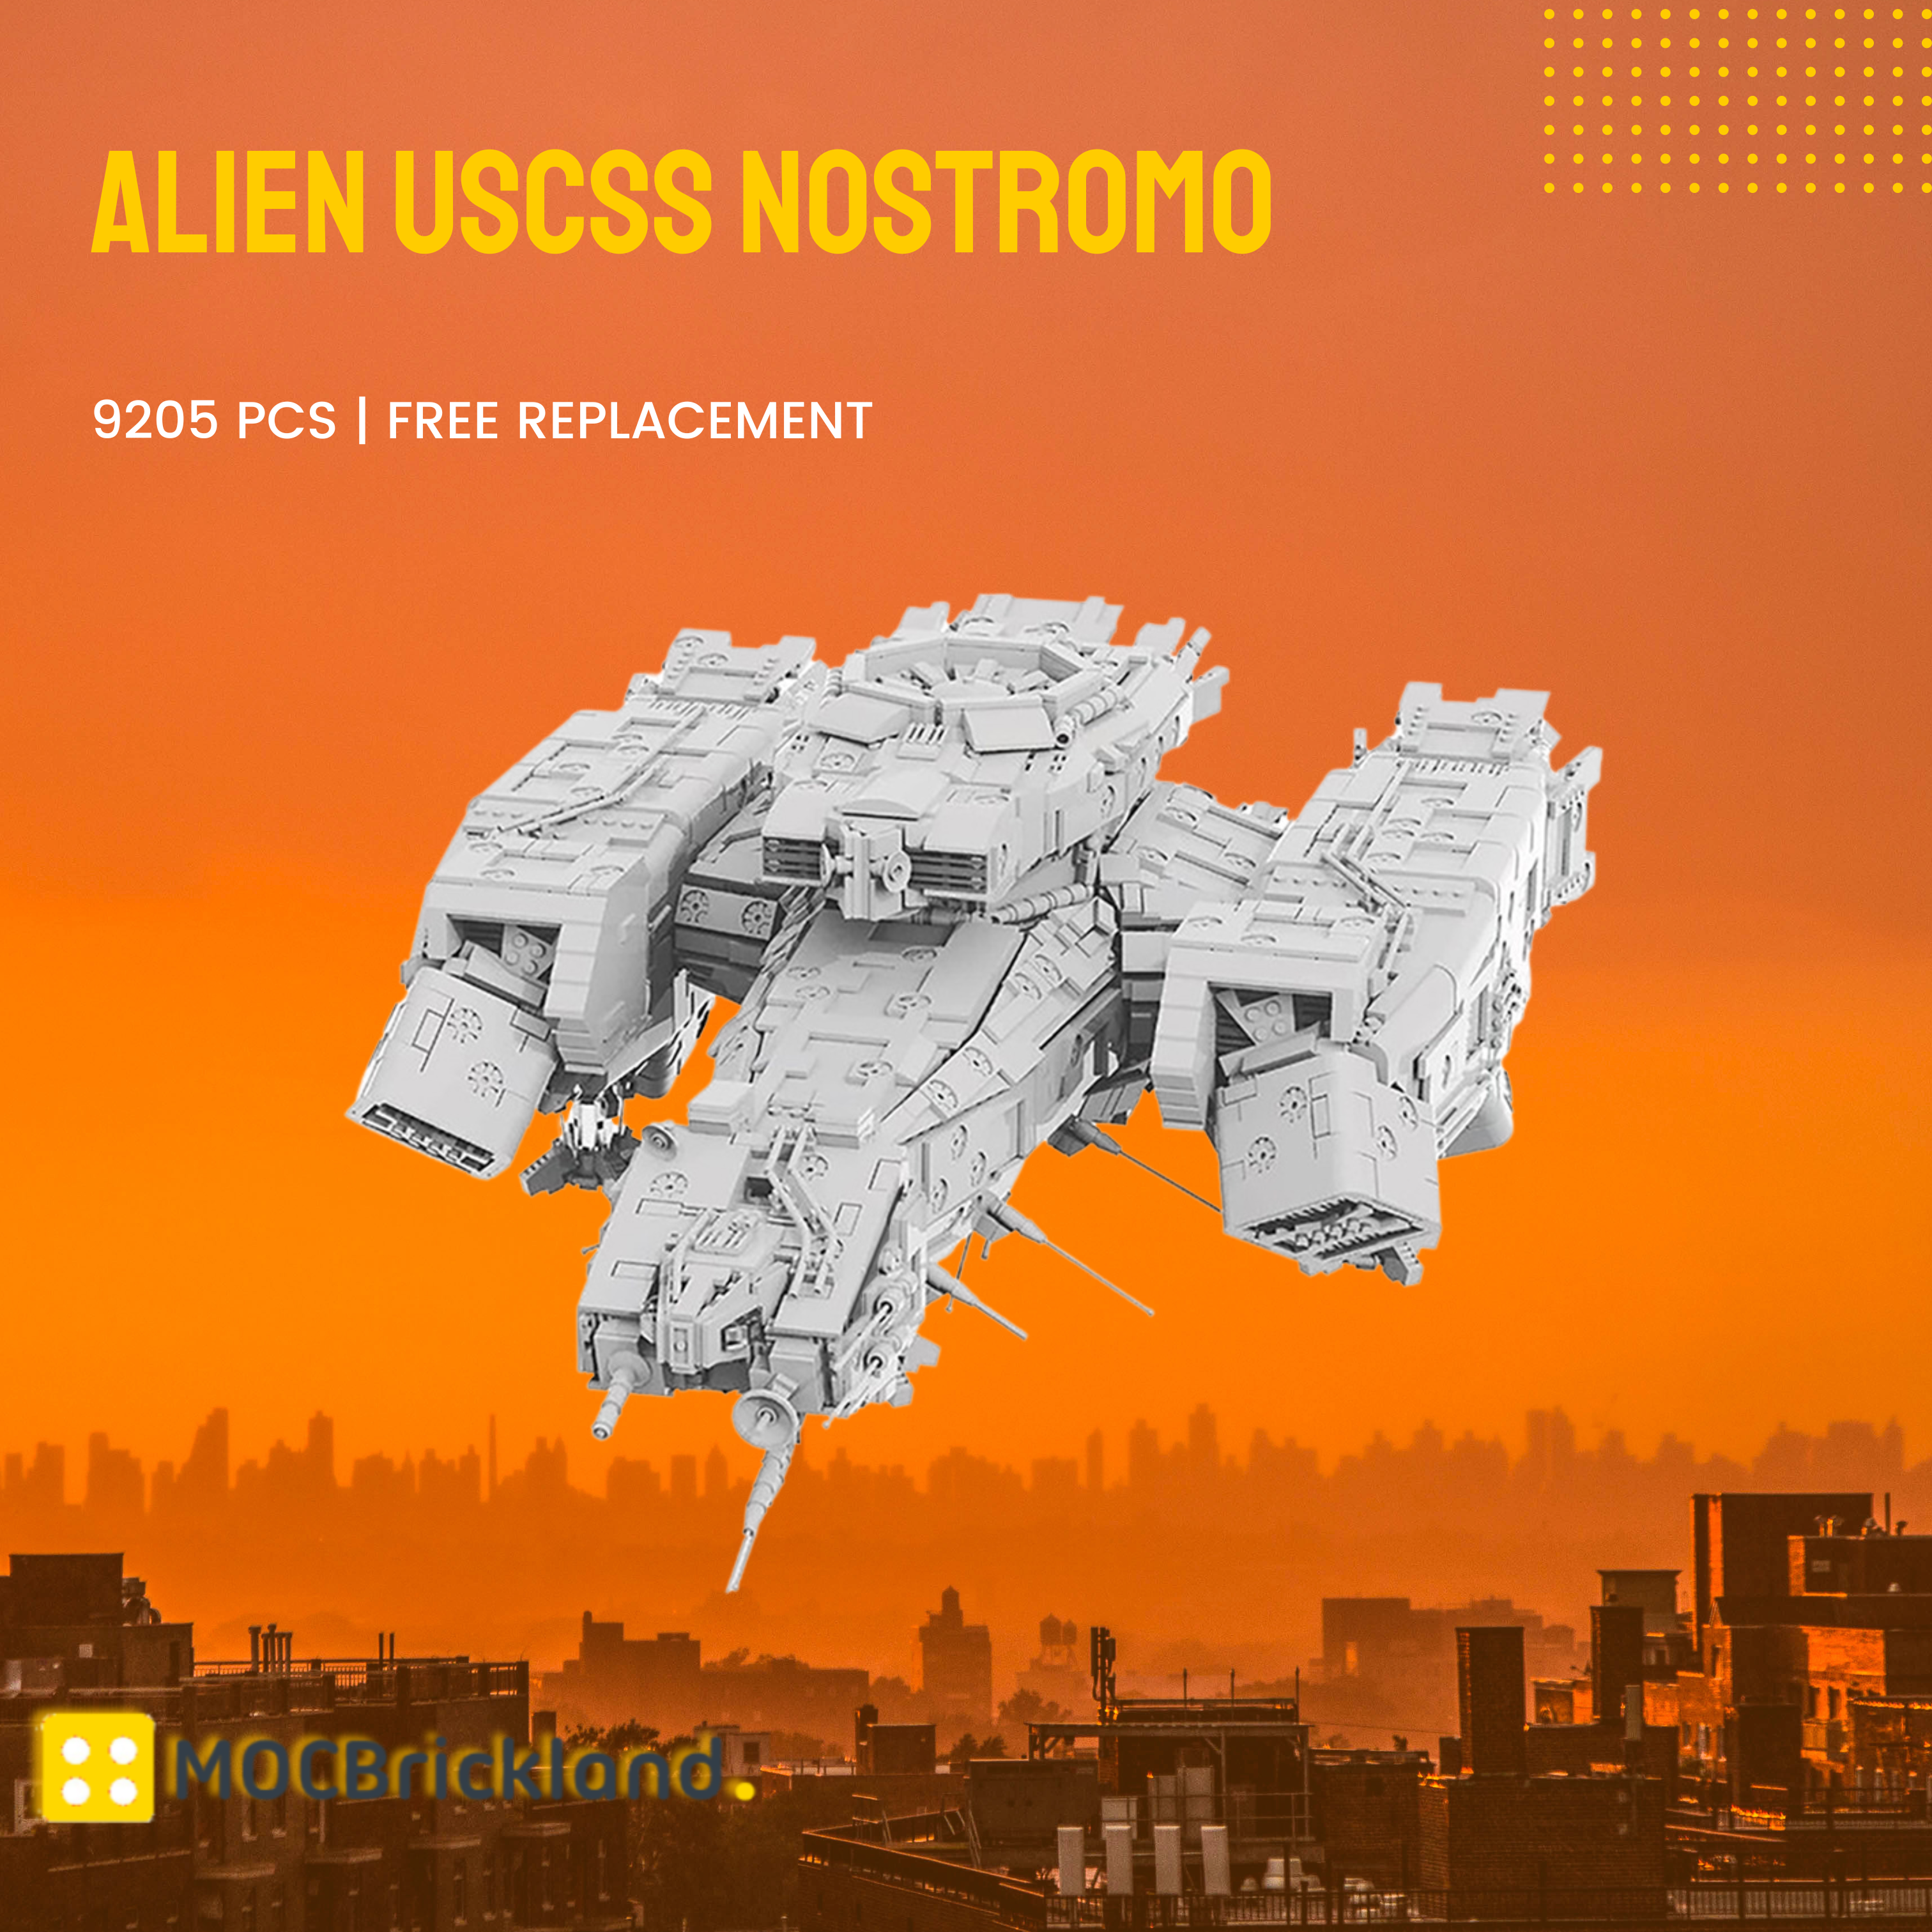 Alien USCSS NOSTROMO MOC-9803 Movie With 9205 Pieces